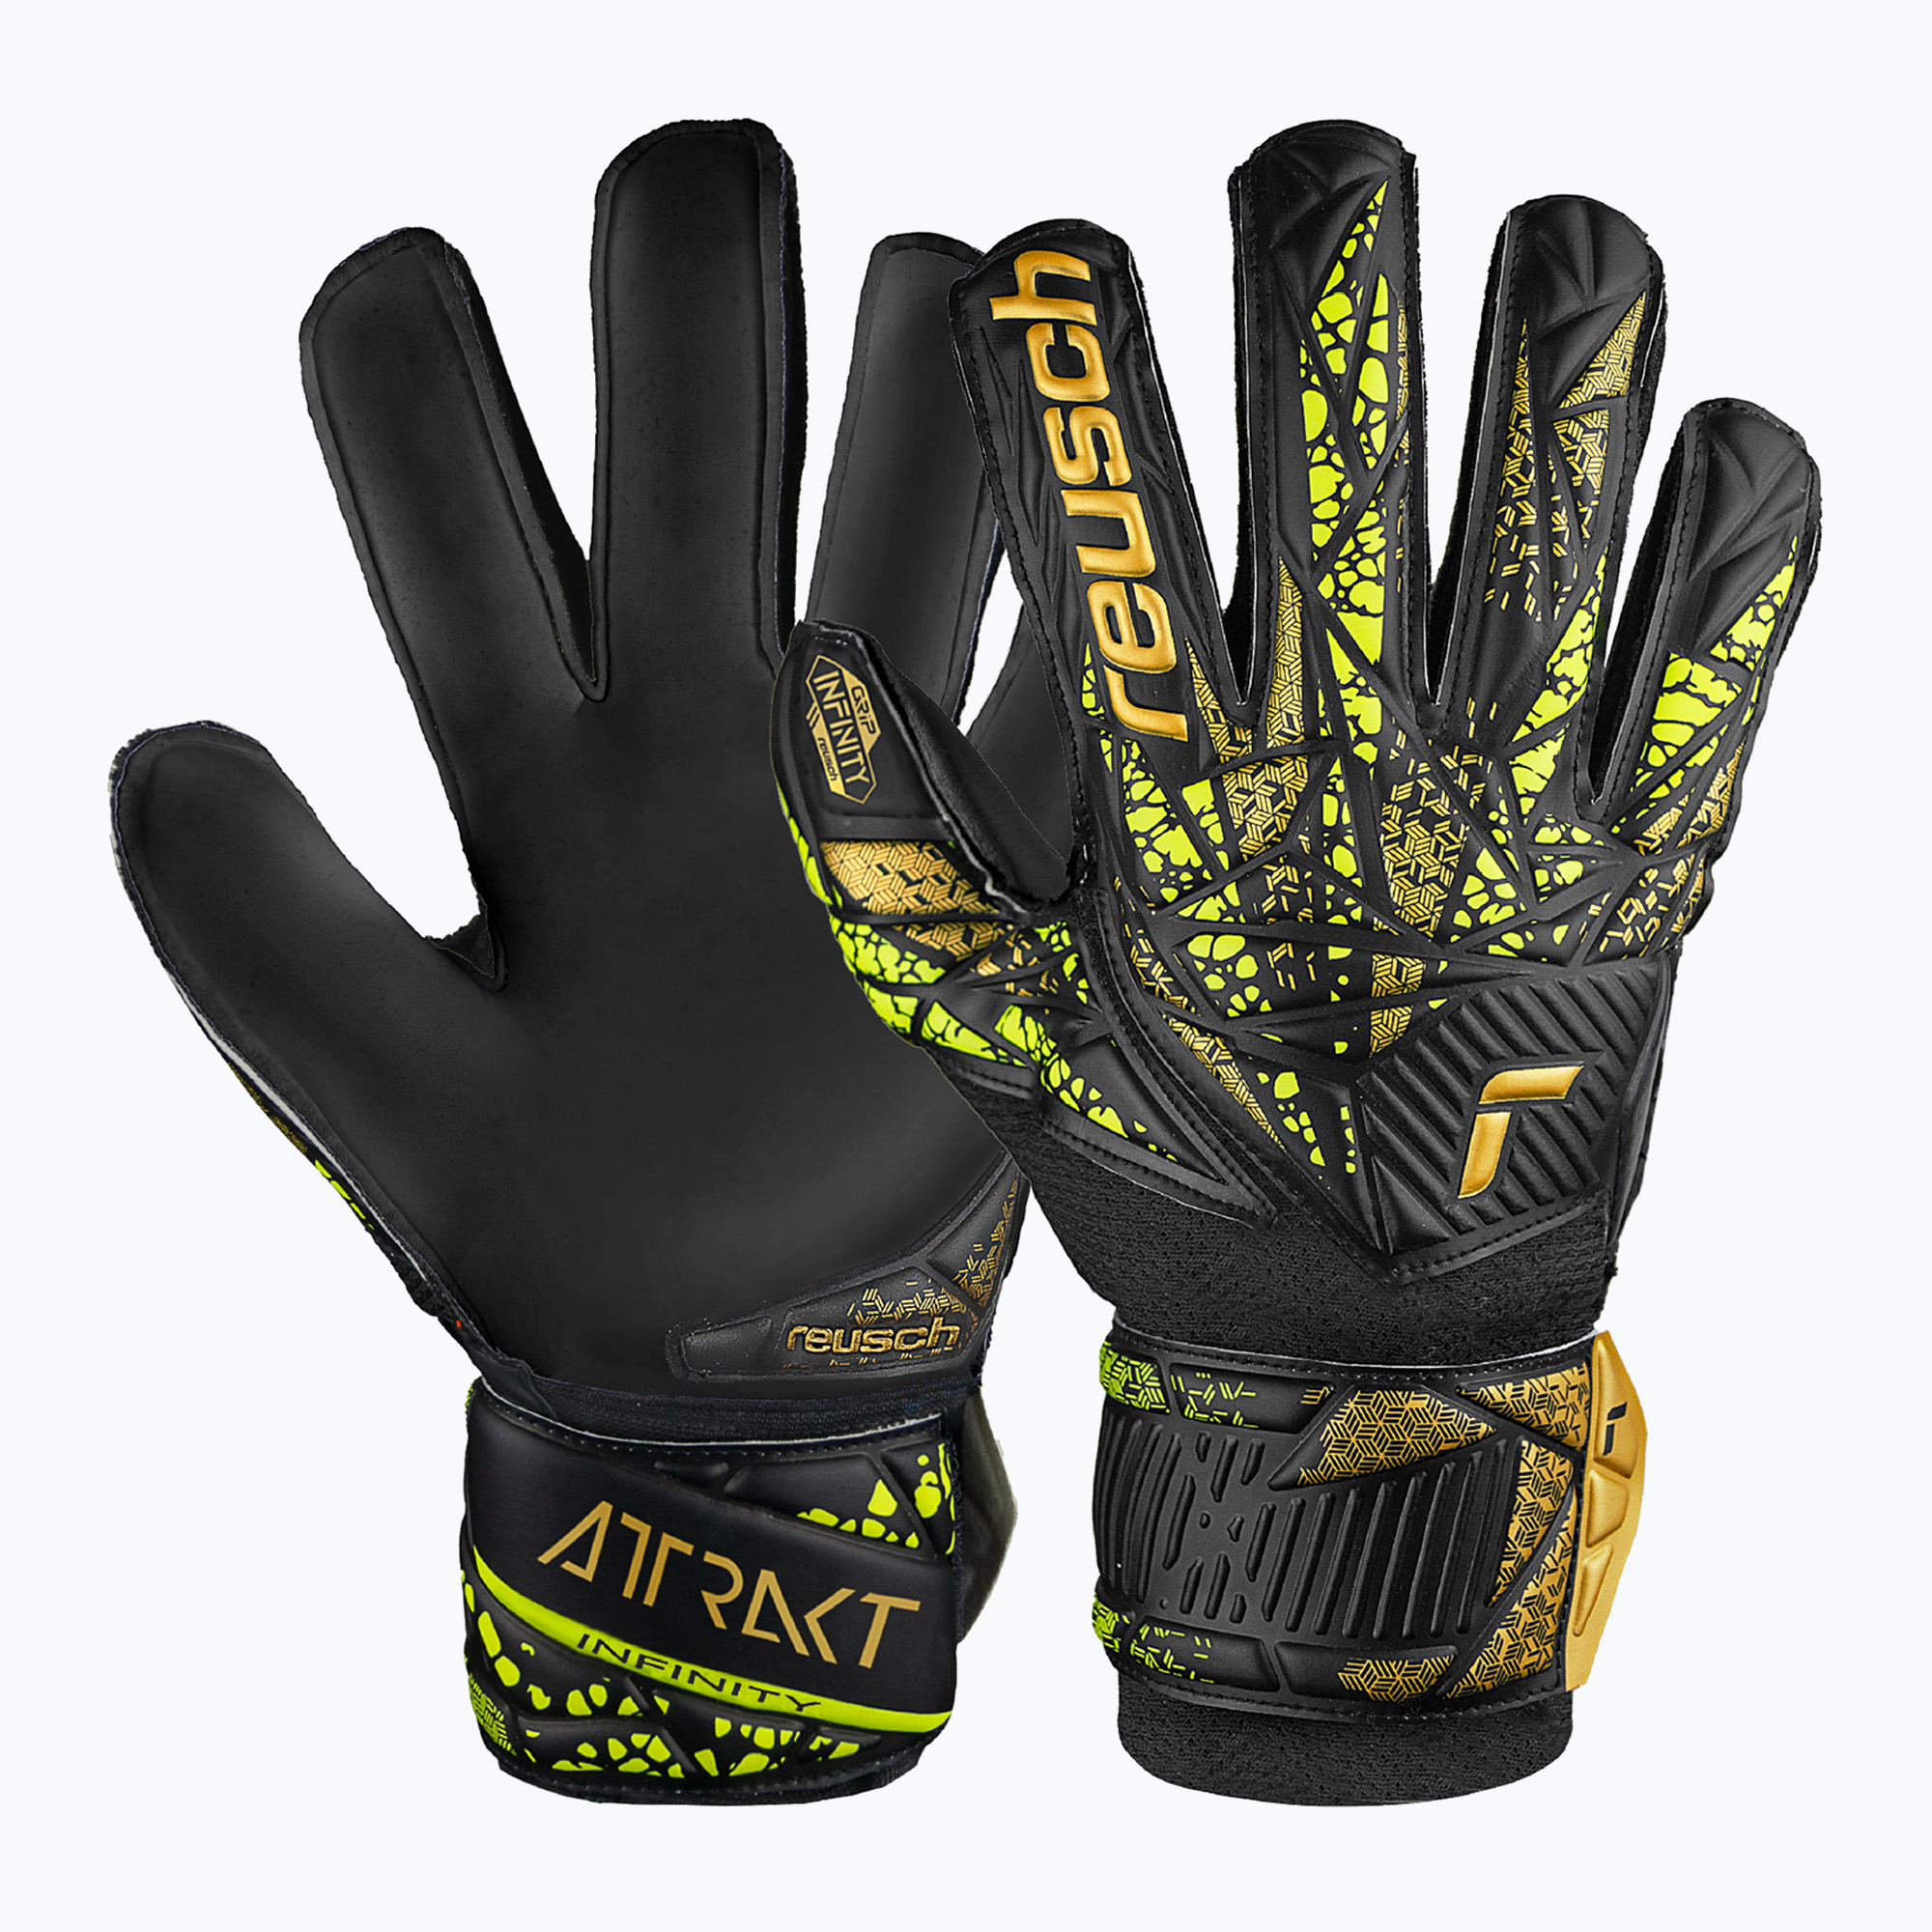 Mănuși de portar pentru copii Reusch Attrakt Infinity Infinity Finger Support negru/aur/galben/negru pentru copii